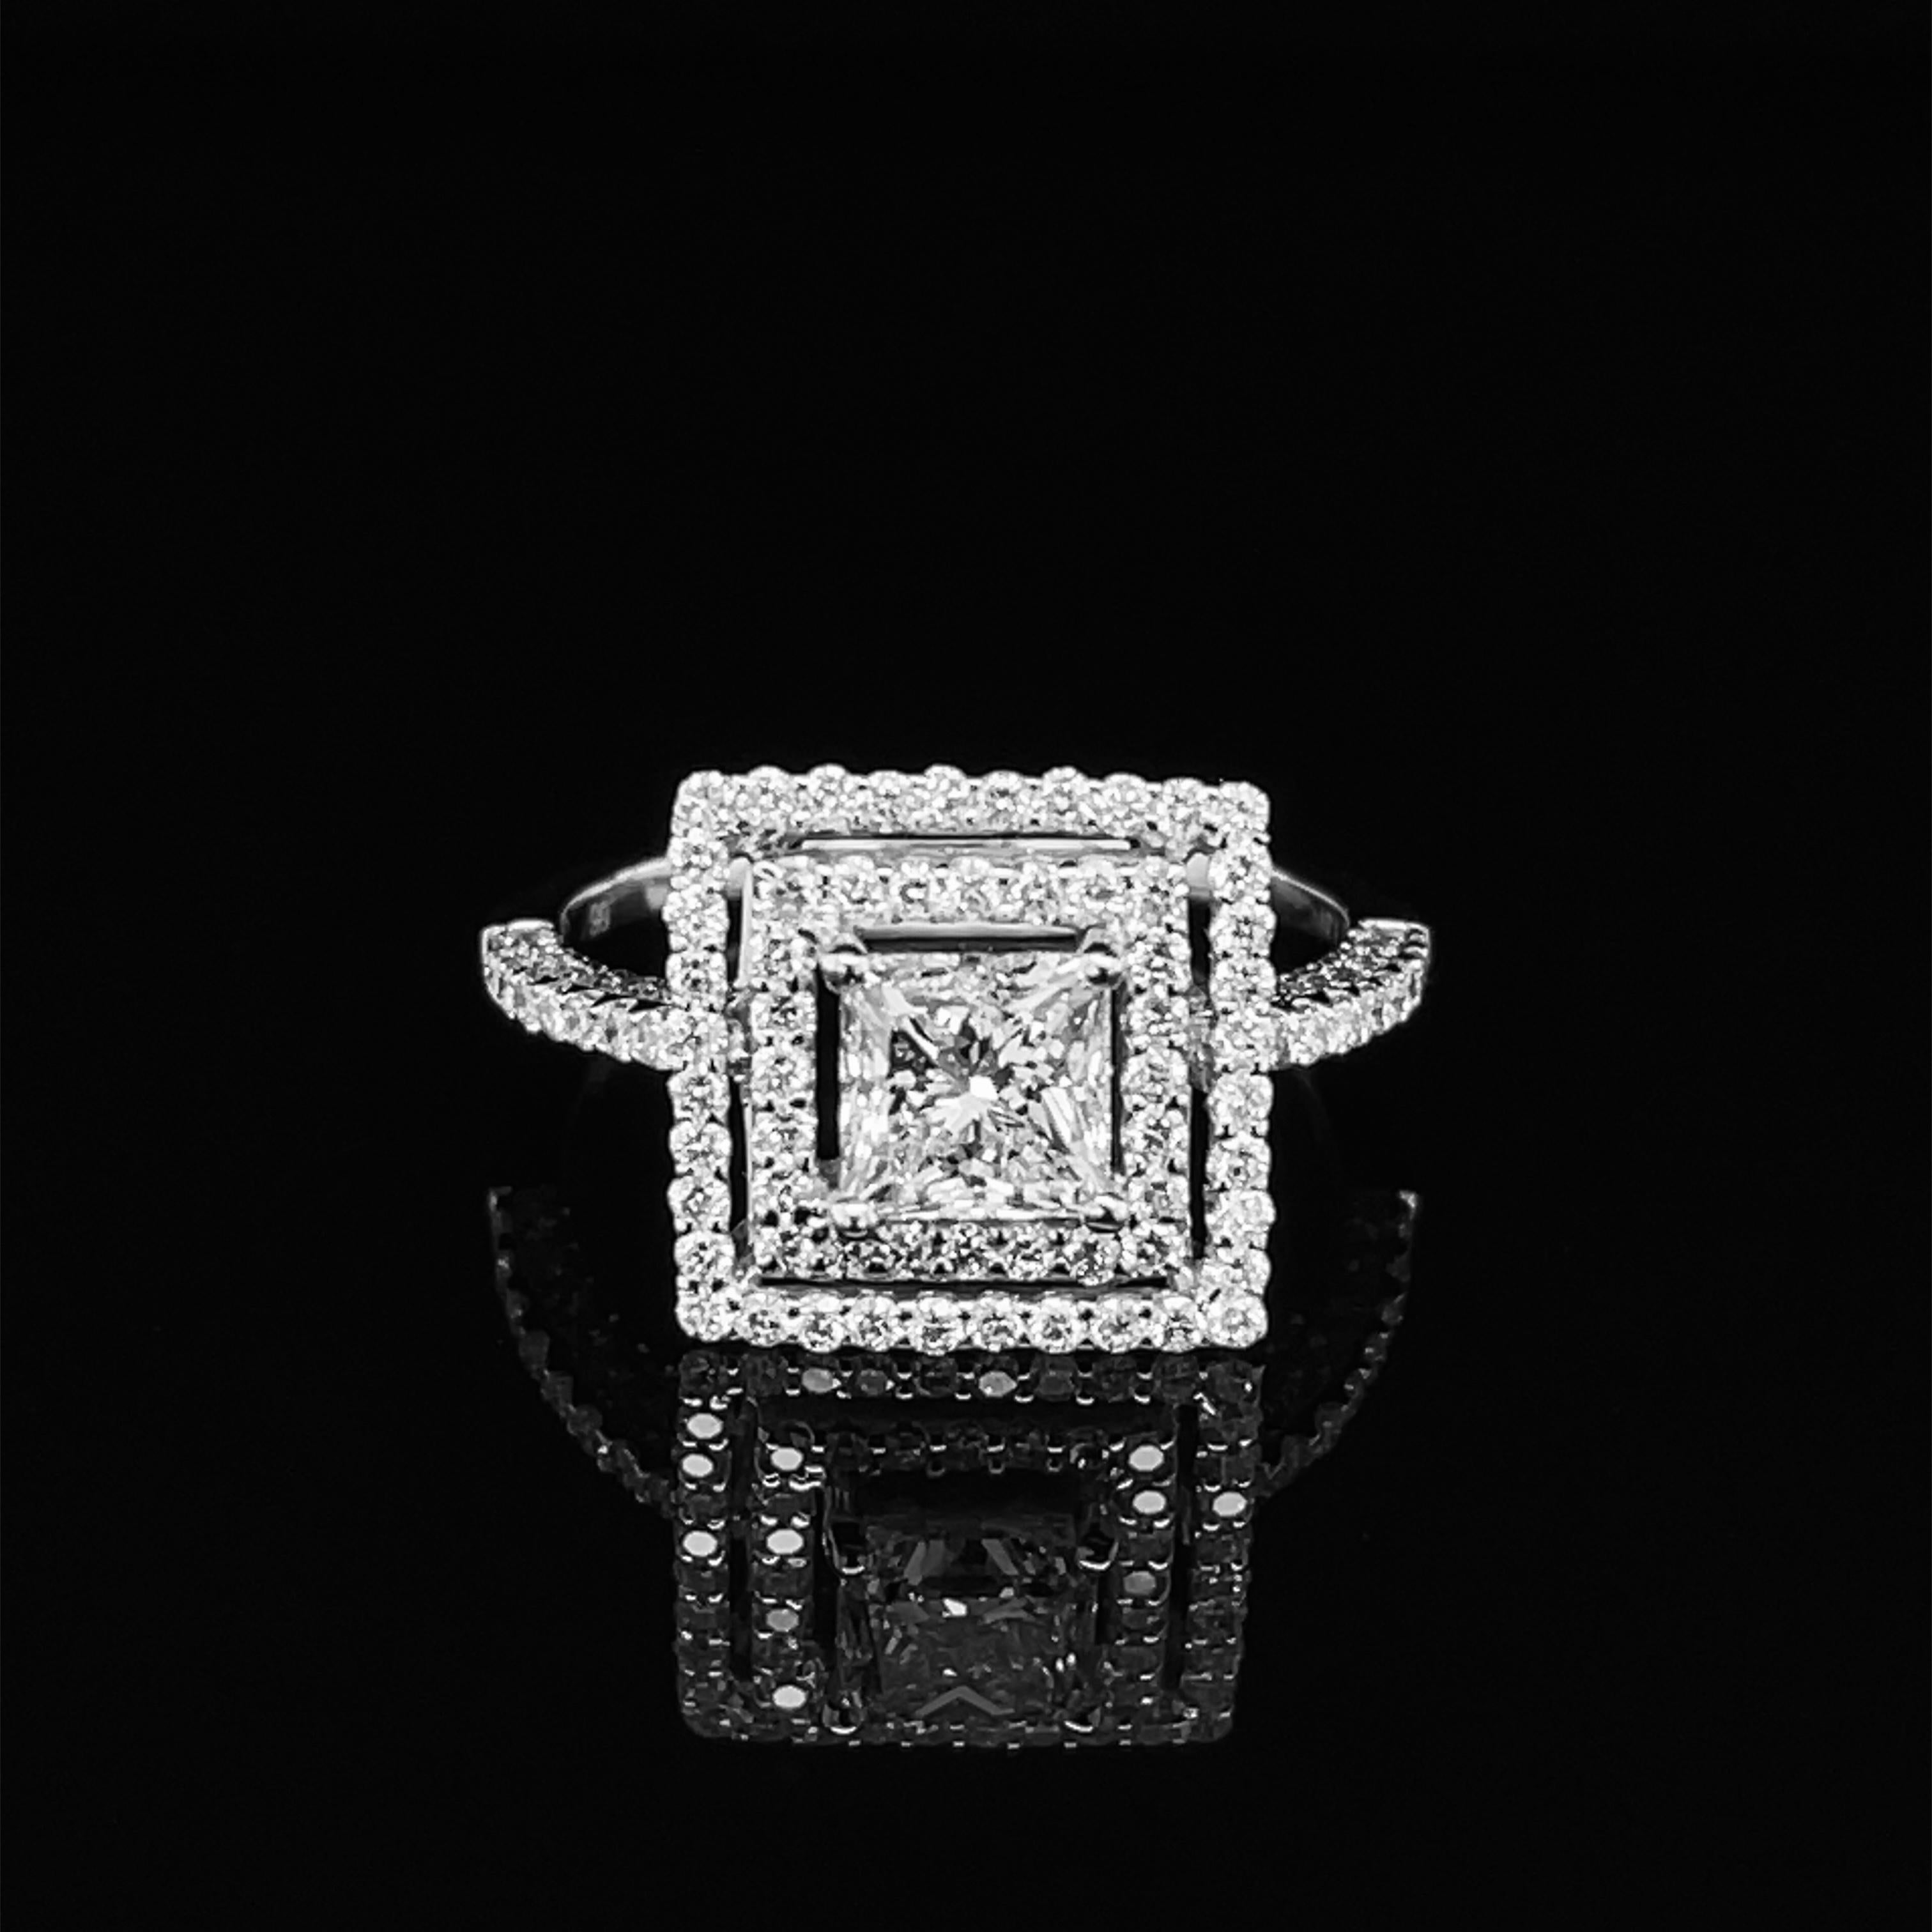 GIA Certified Princess Cut 1.01 Carat F VVS2 Diamond Ring in 18K White Gold For Sale 3